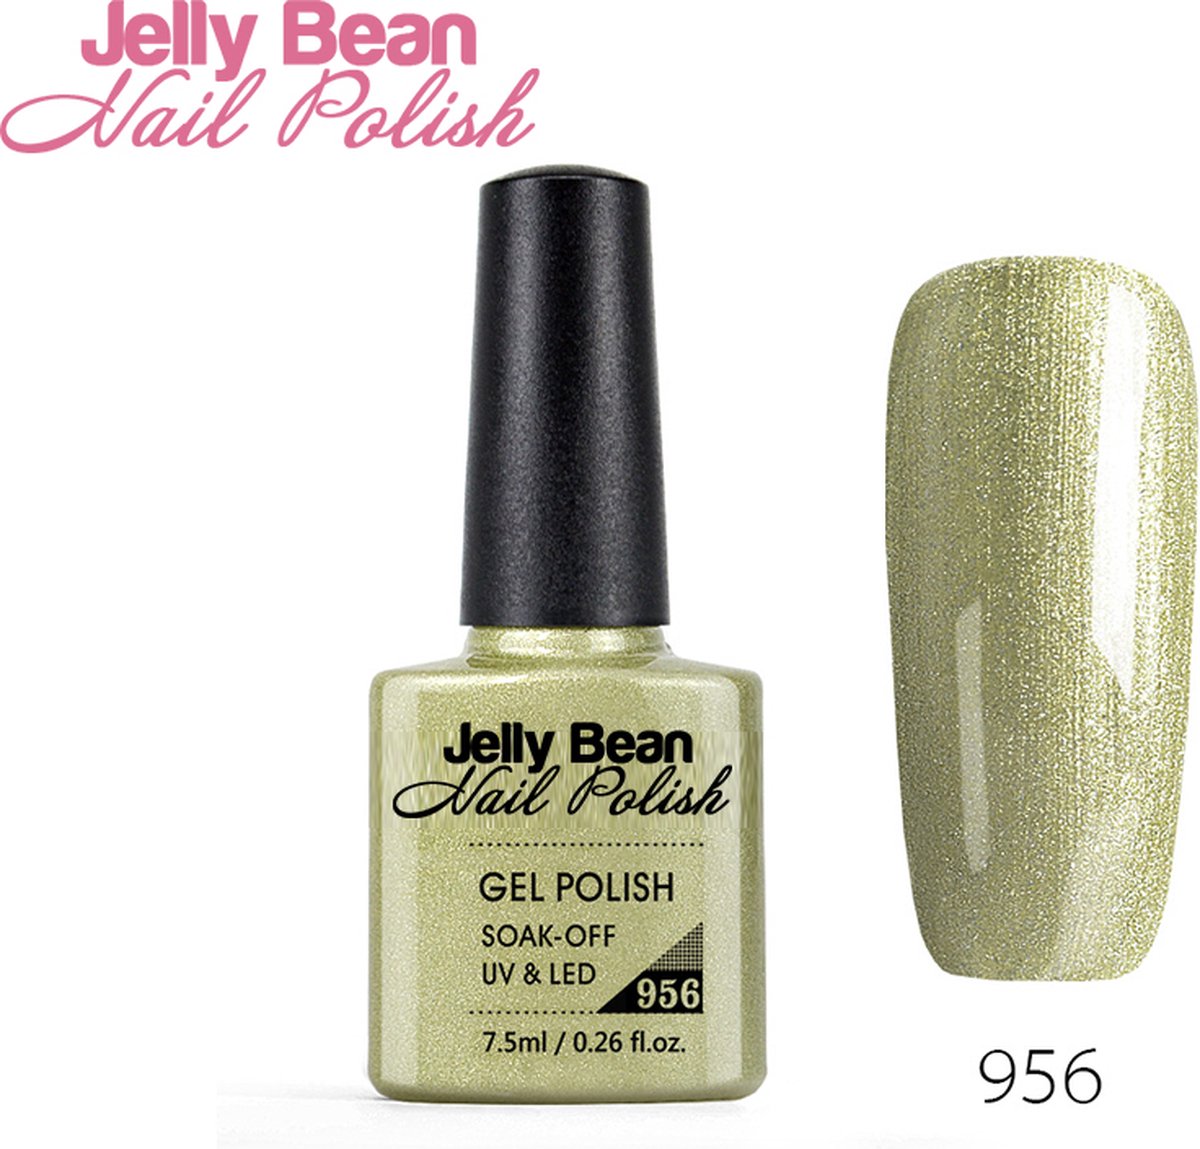 Jelly Bean Nail Polish UV gelnagellak 956